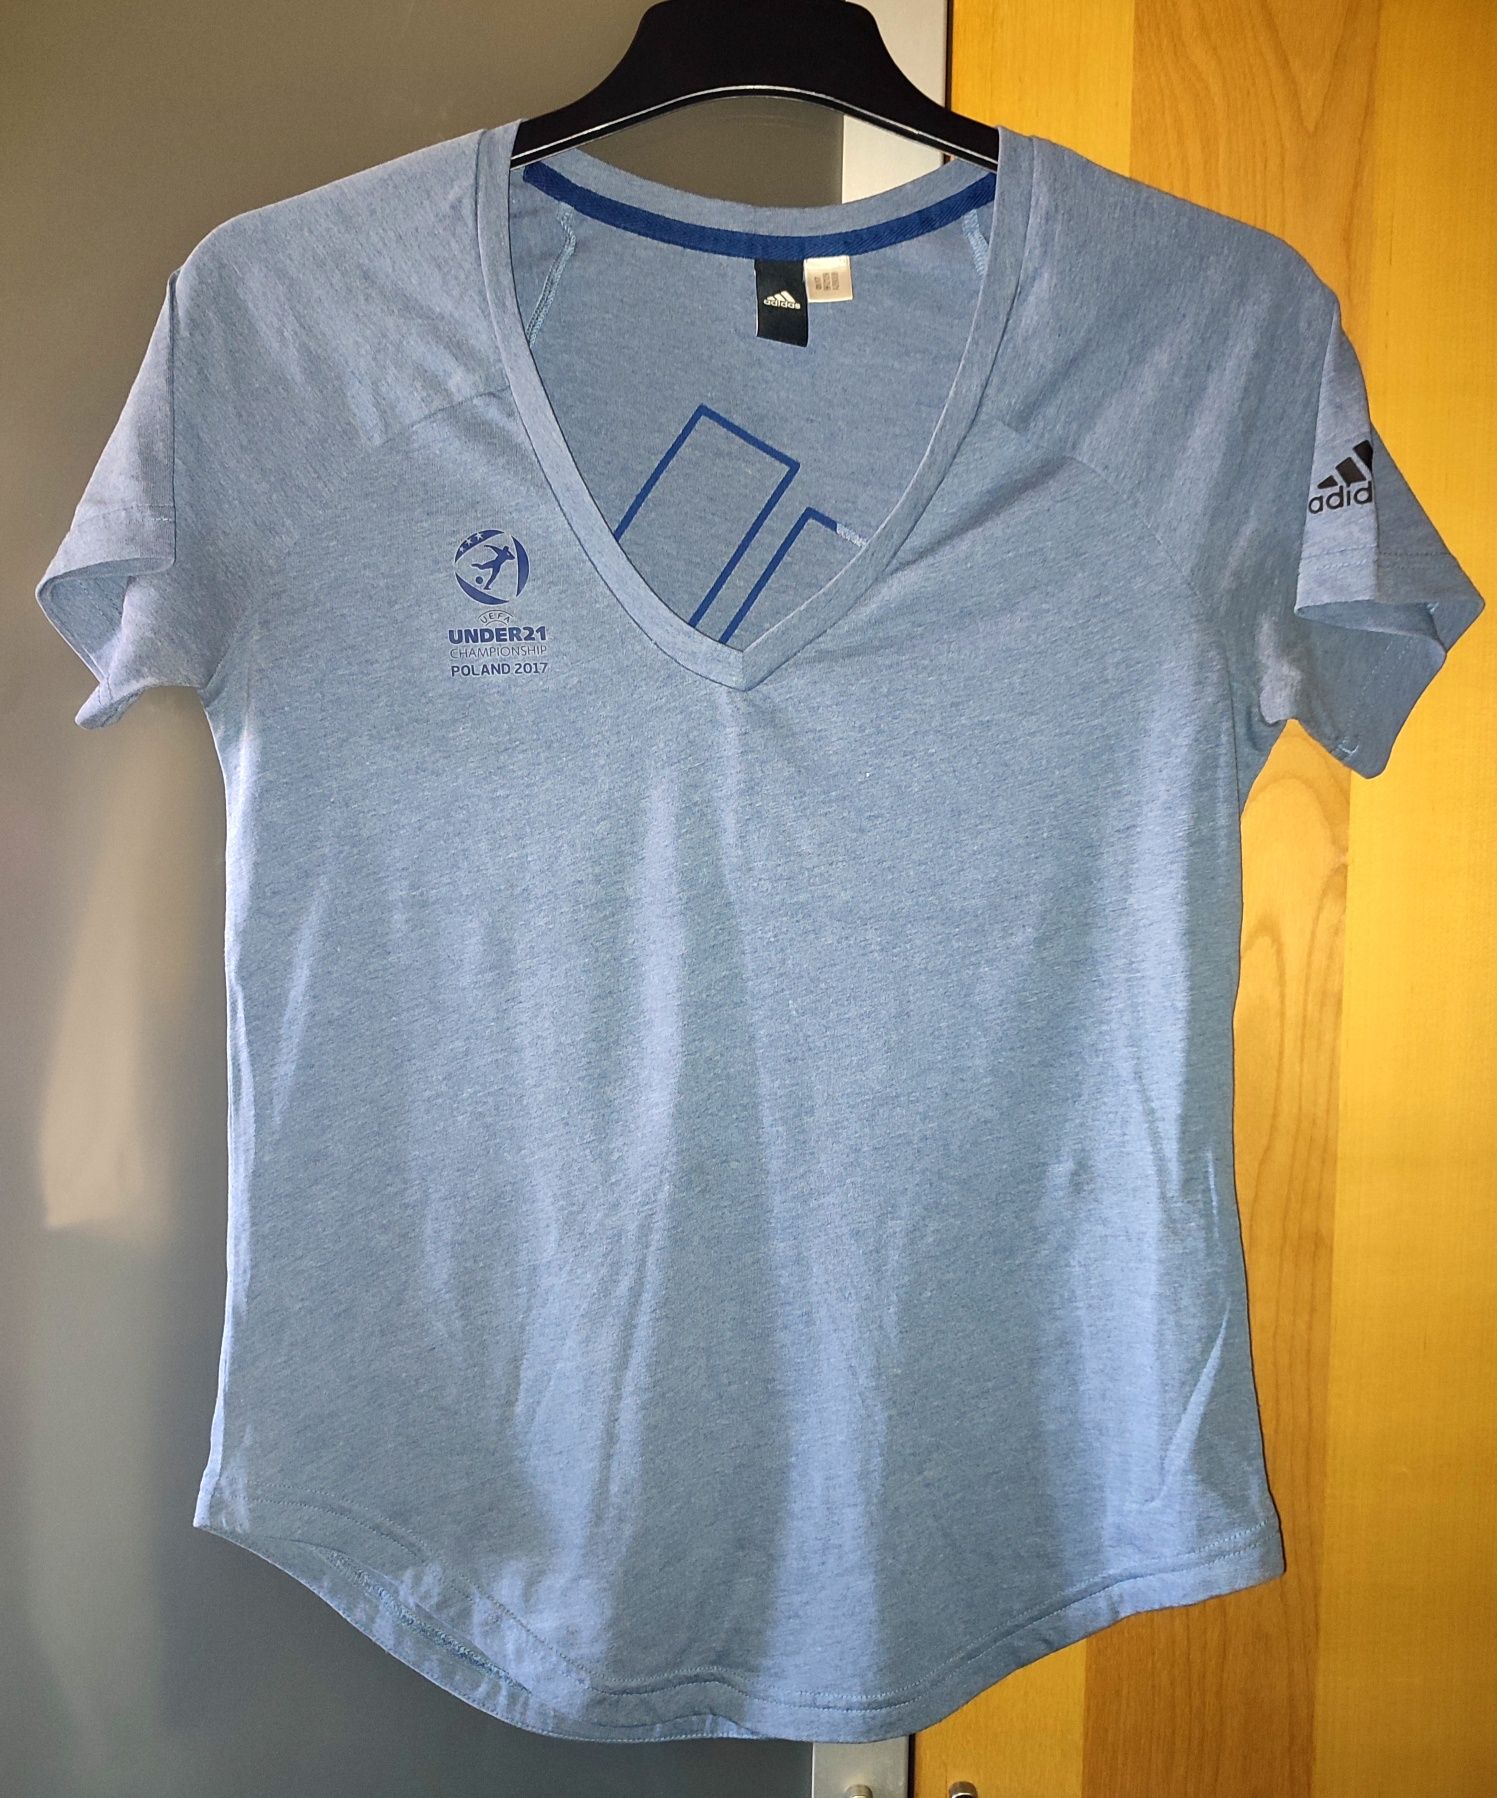 Bluzka koszulka Adidas damska wygodna szaro-niebieska